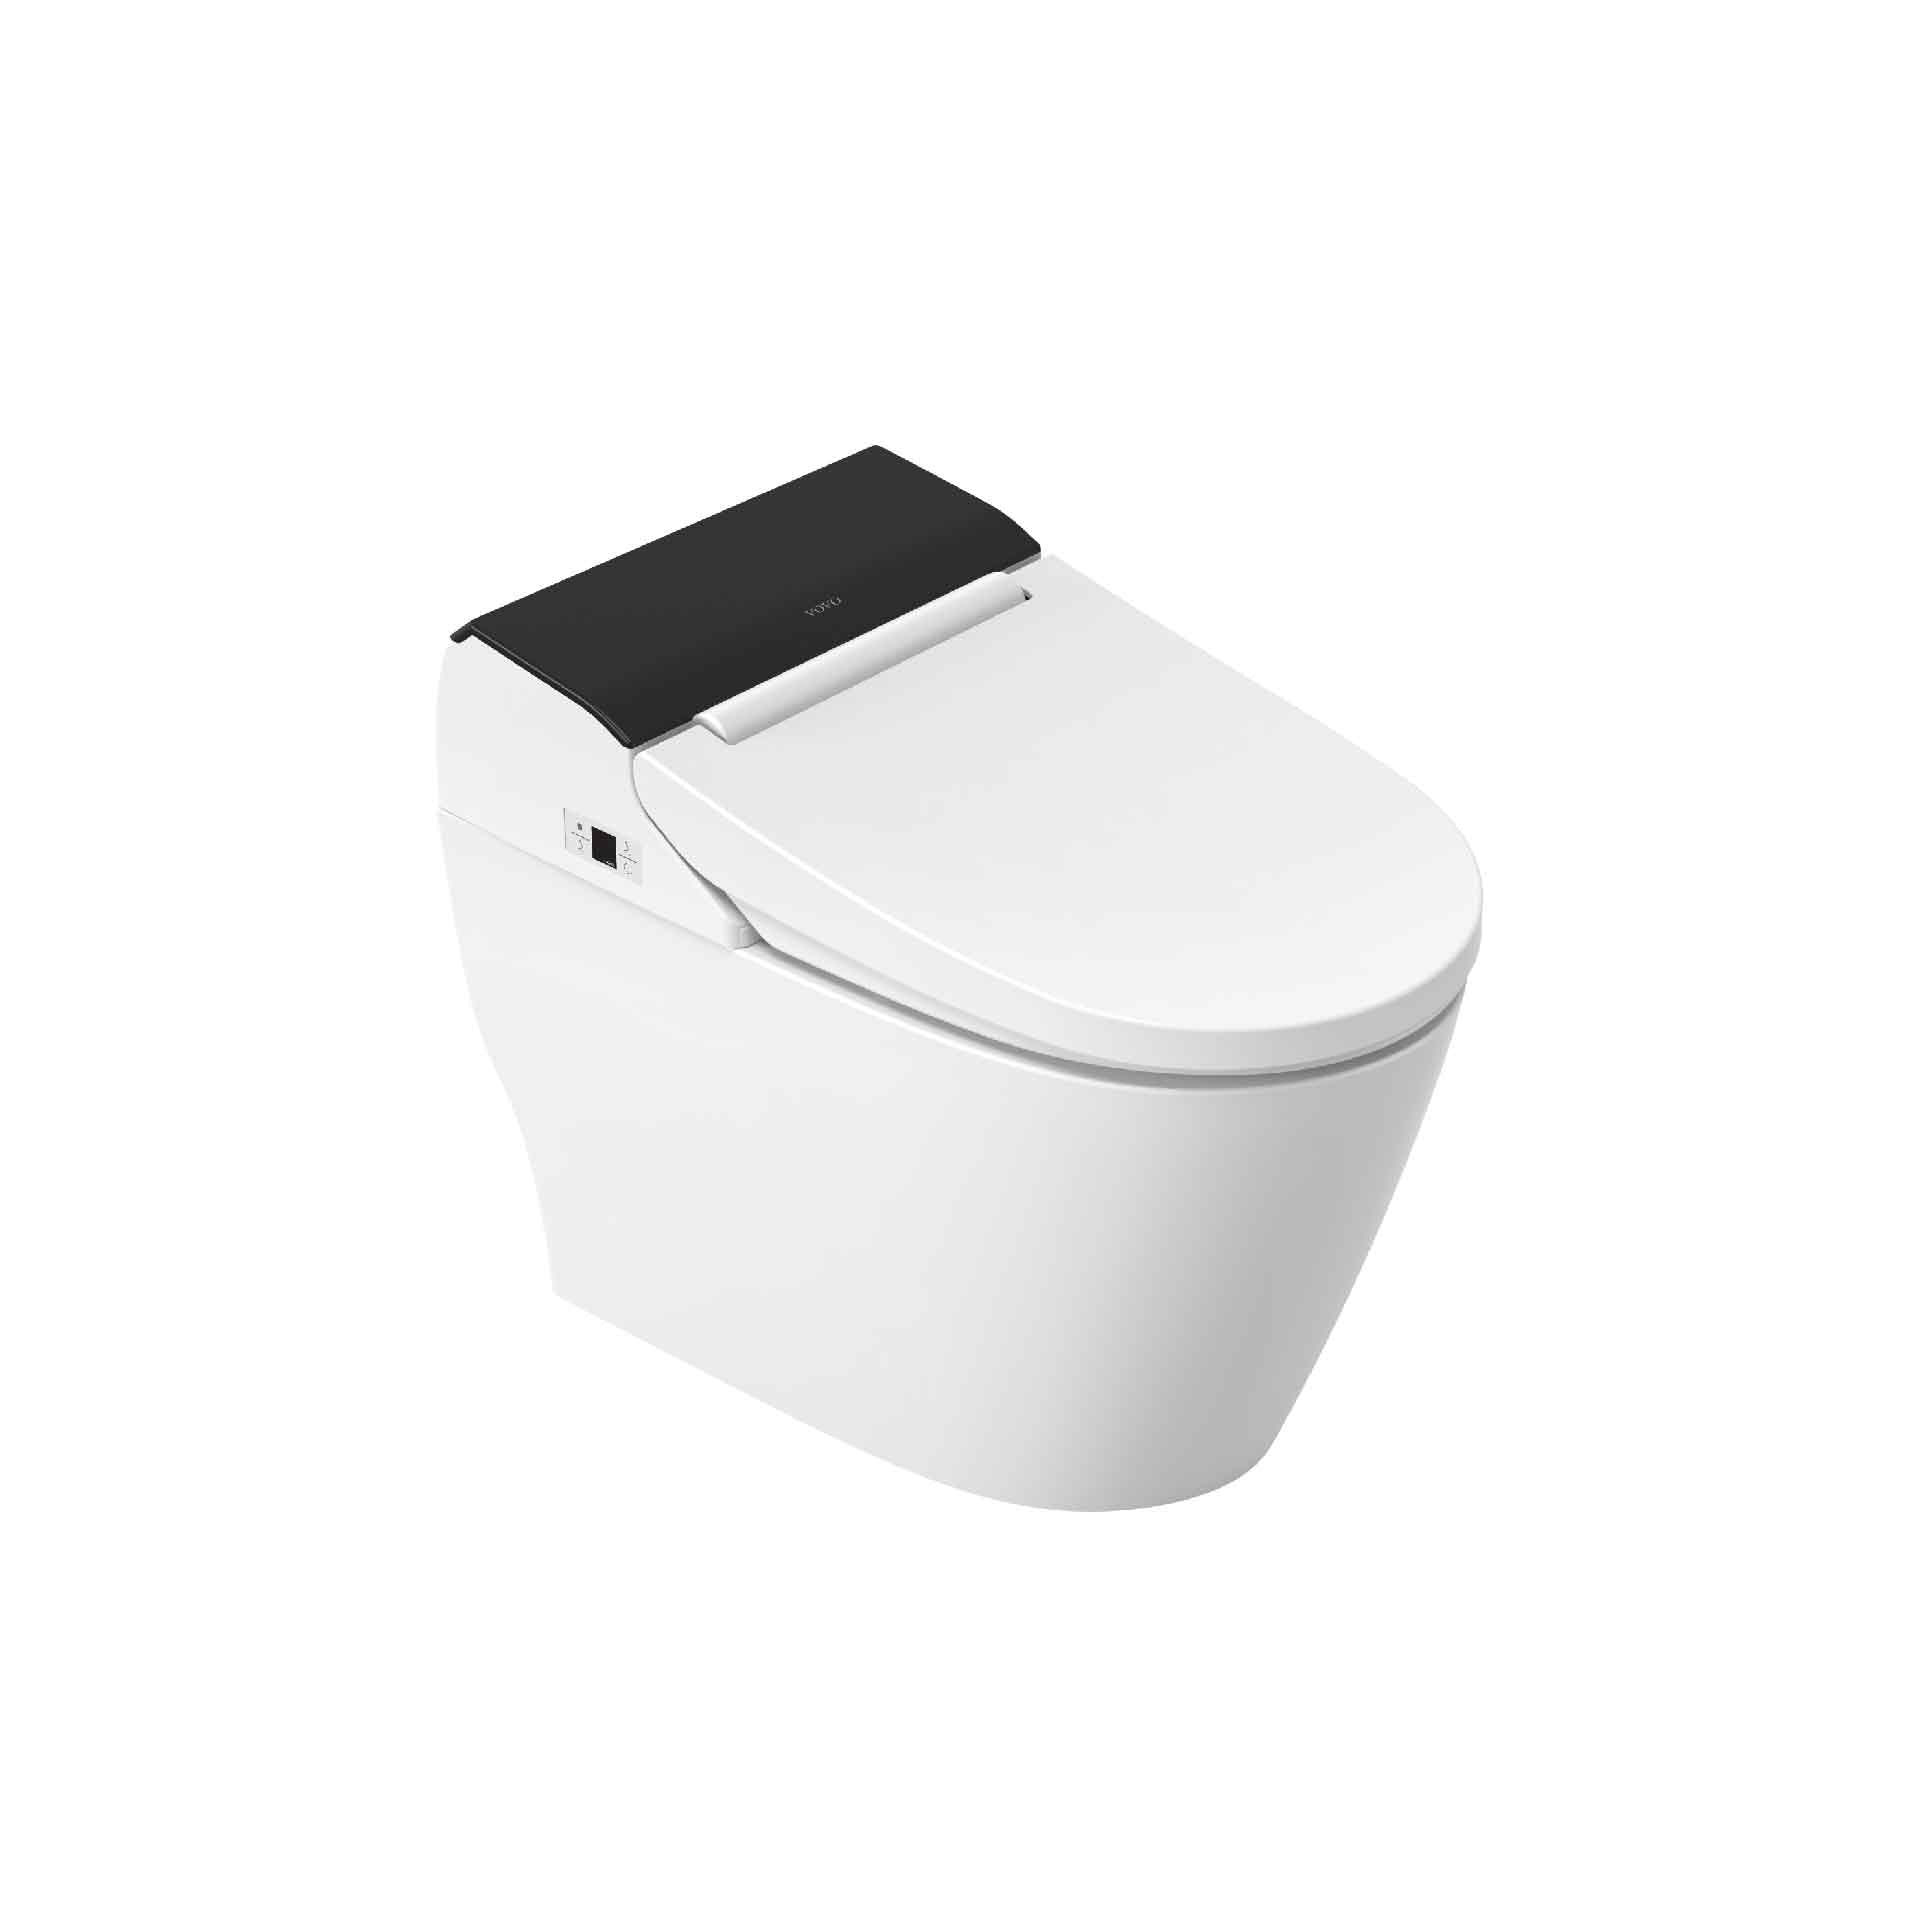 VOVO Bidet Toilet with Auto Flushing TCB 8100B